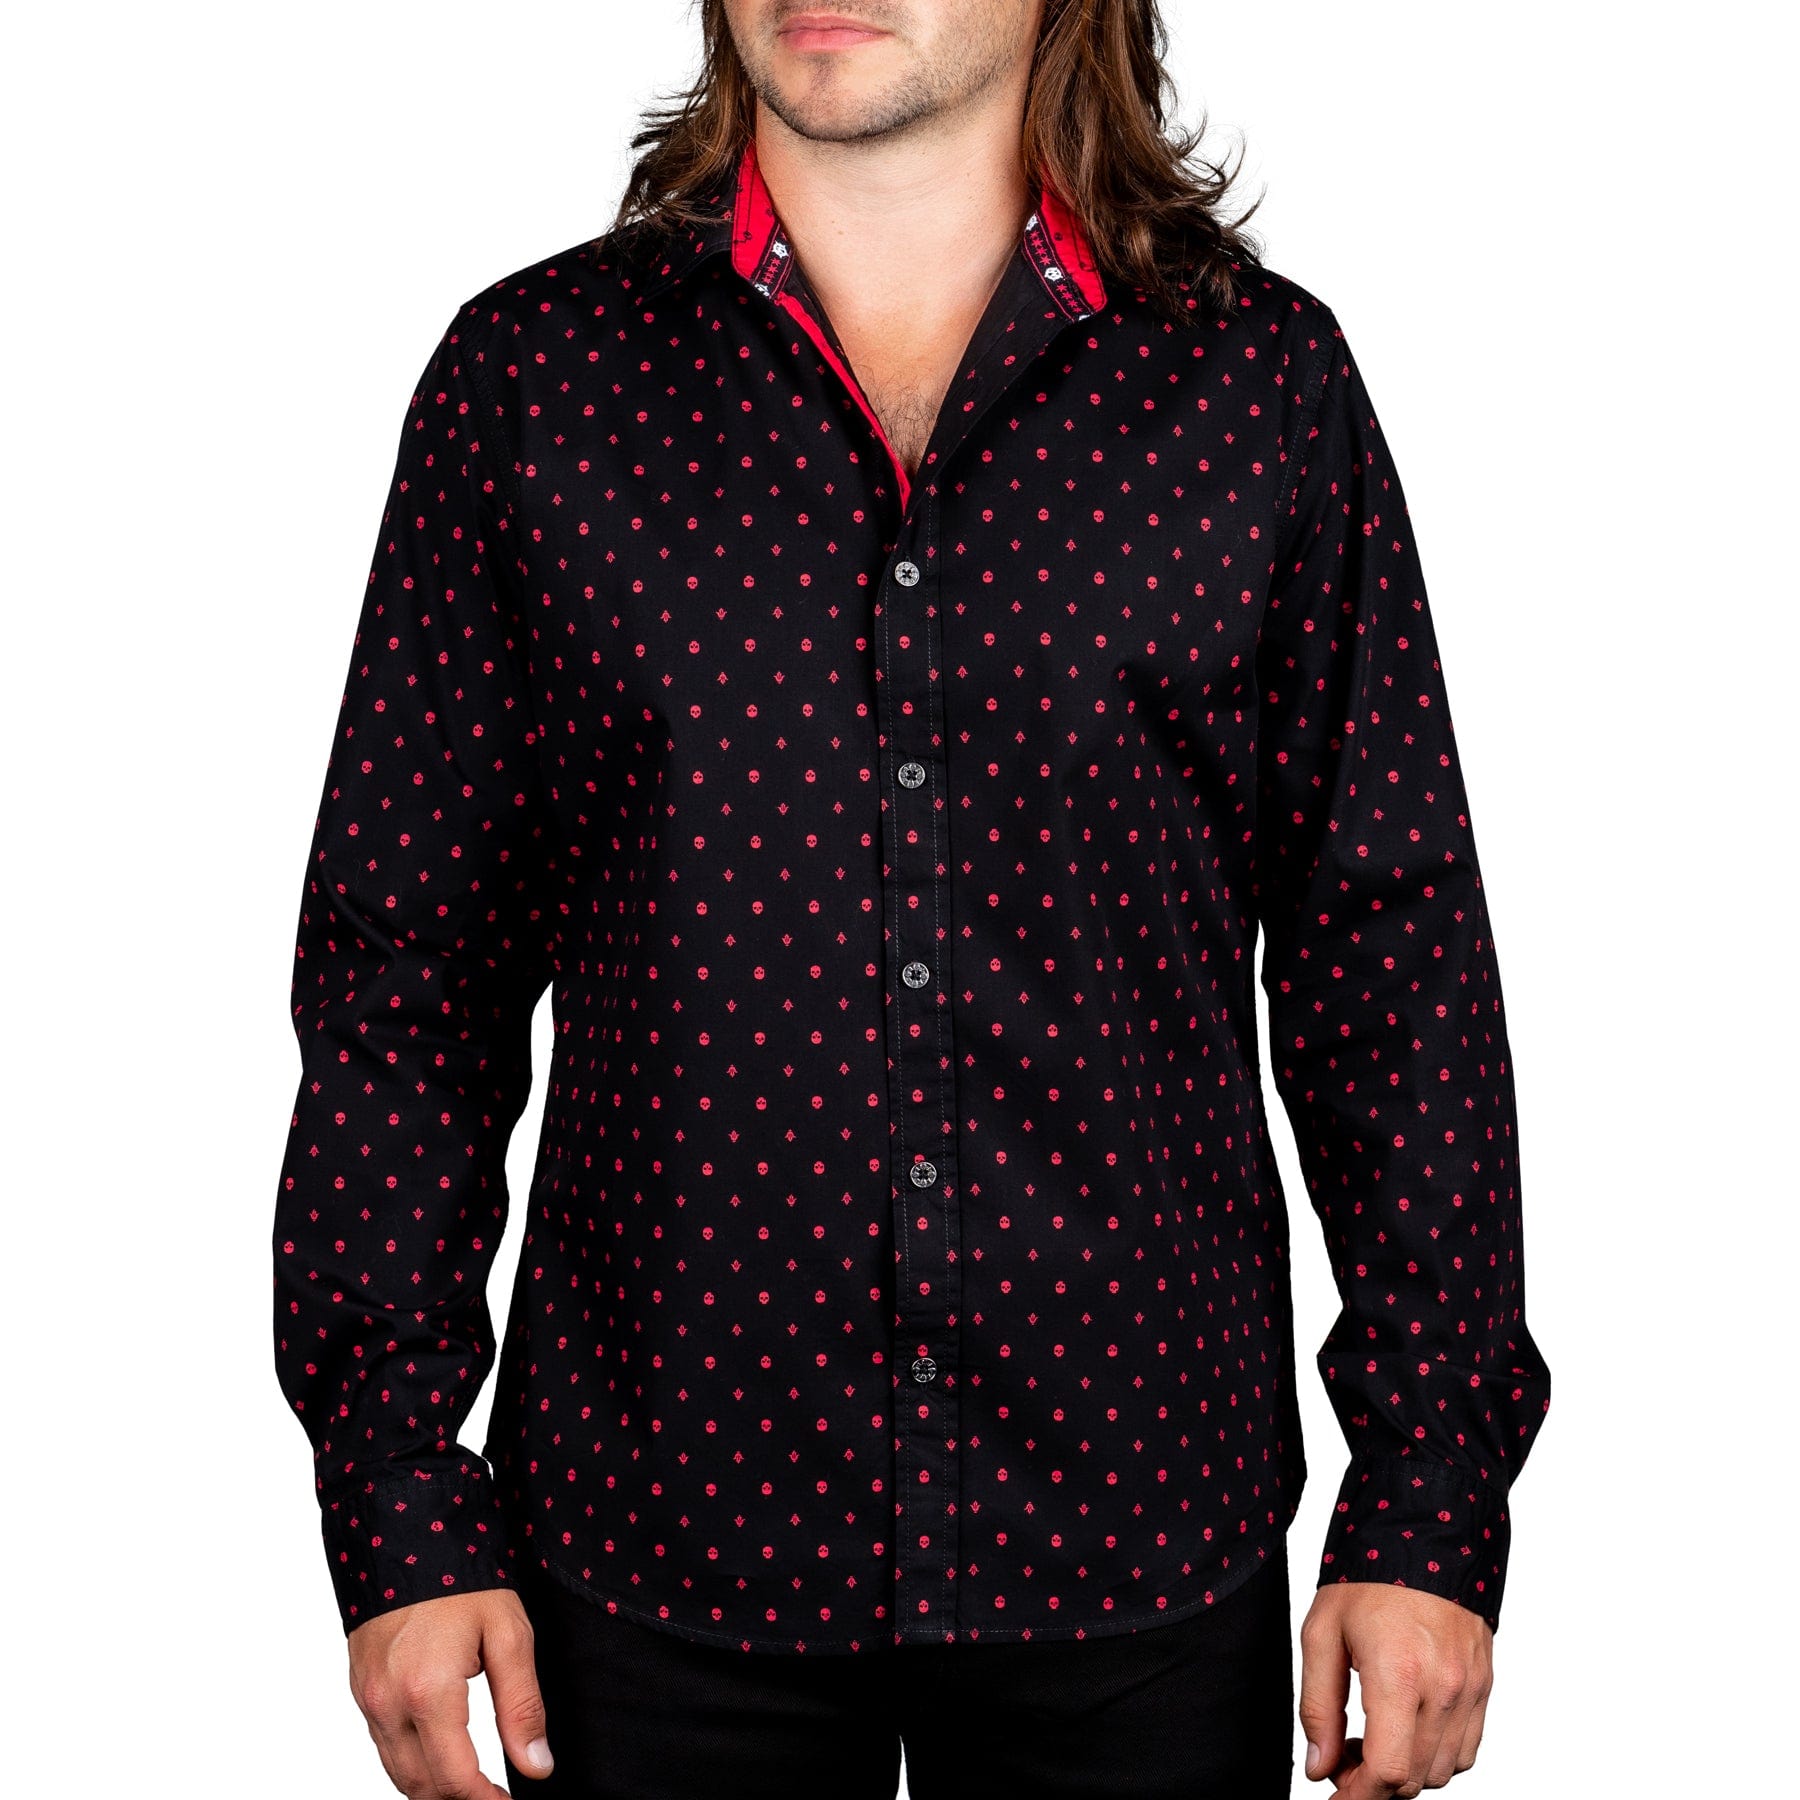 Wornstar Clothing Mens Shirt. Button Down Long Sleeve Iris Shirt